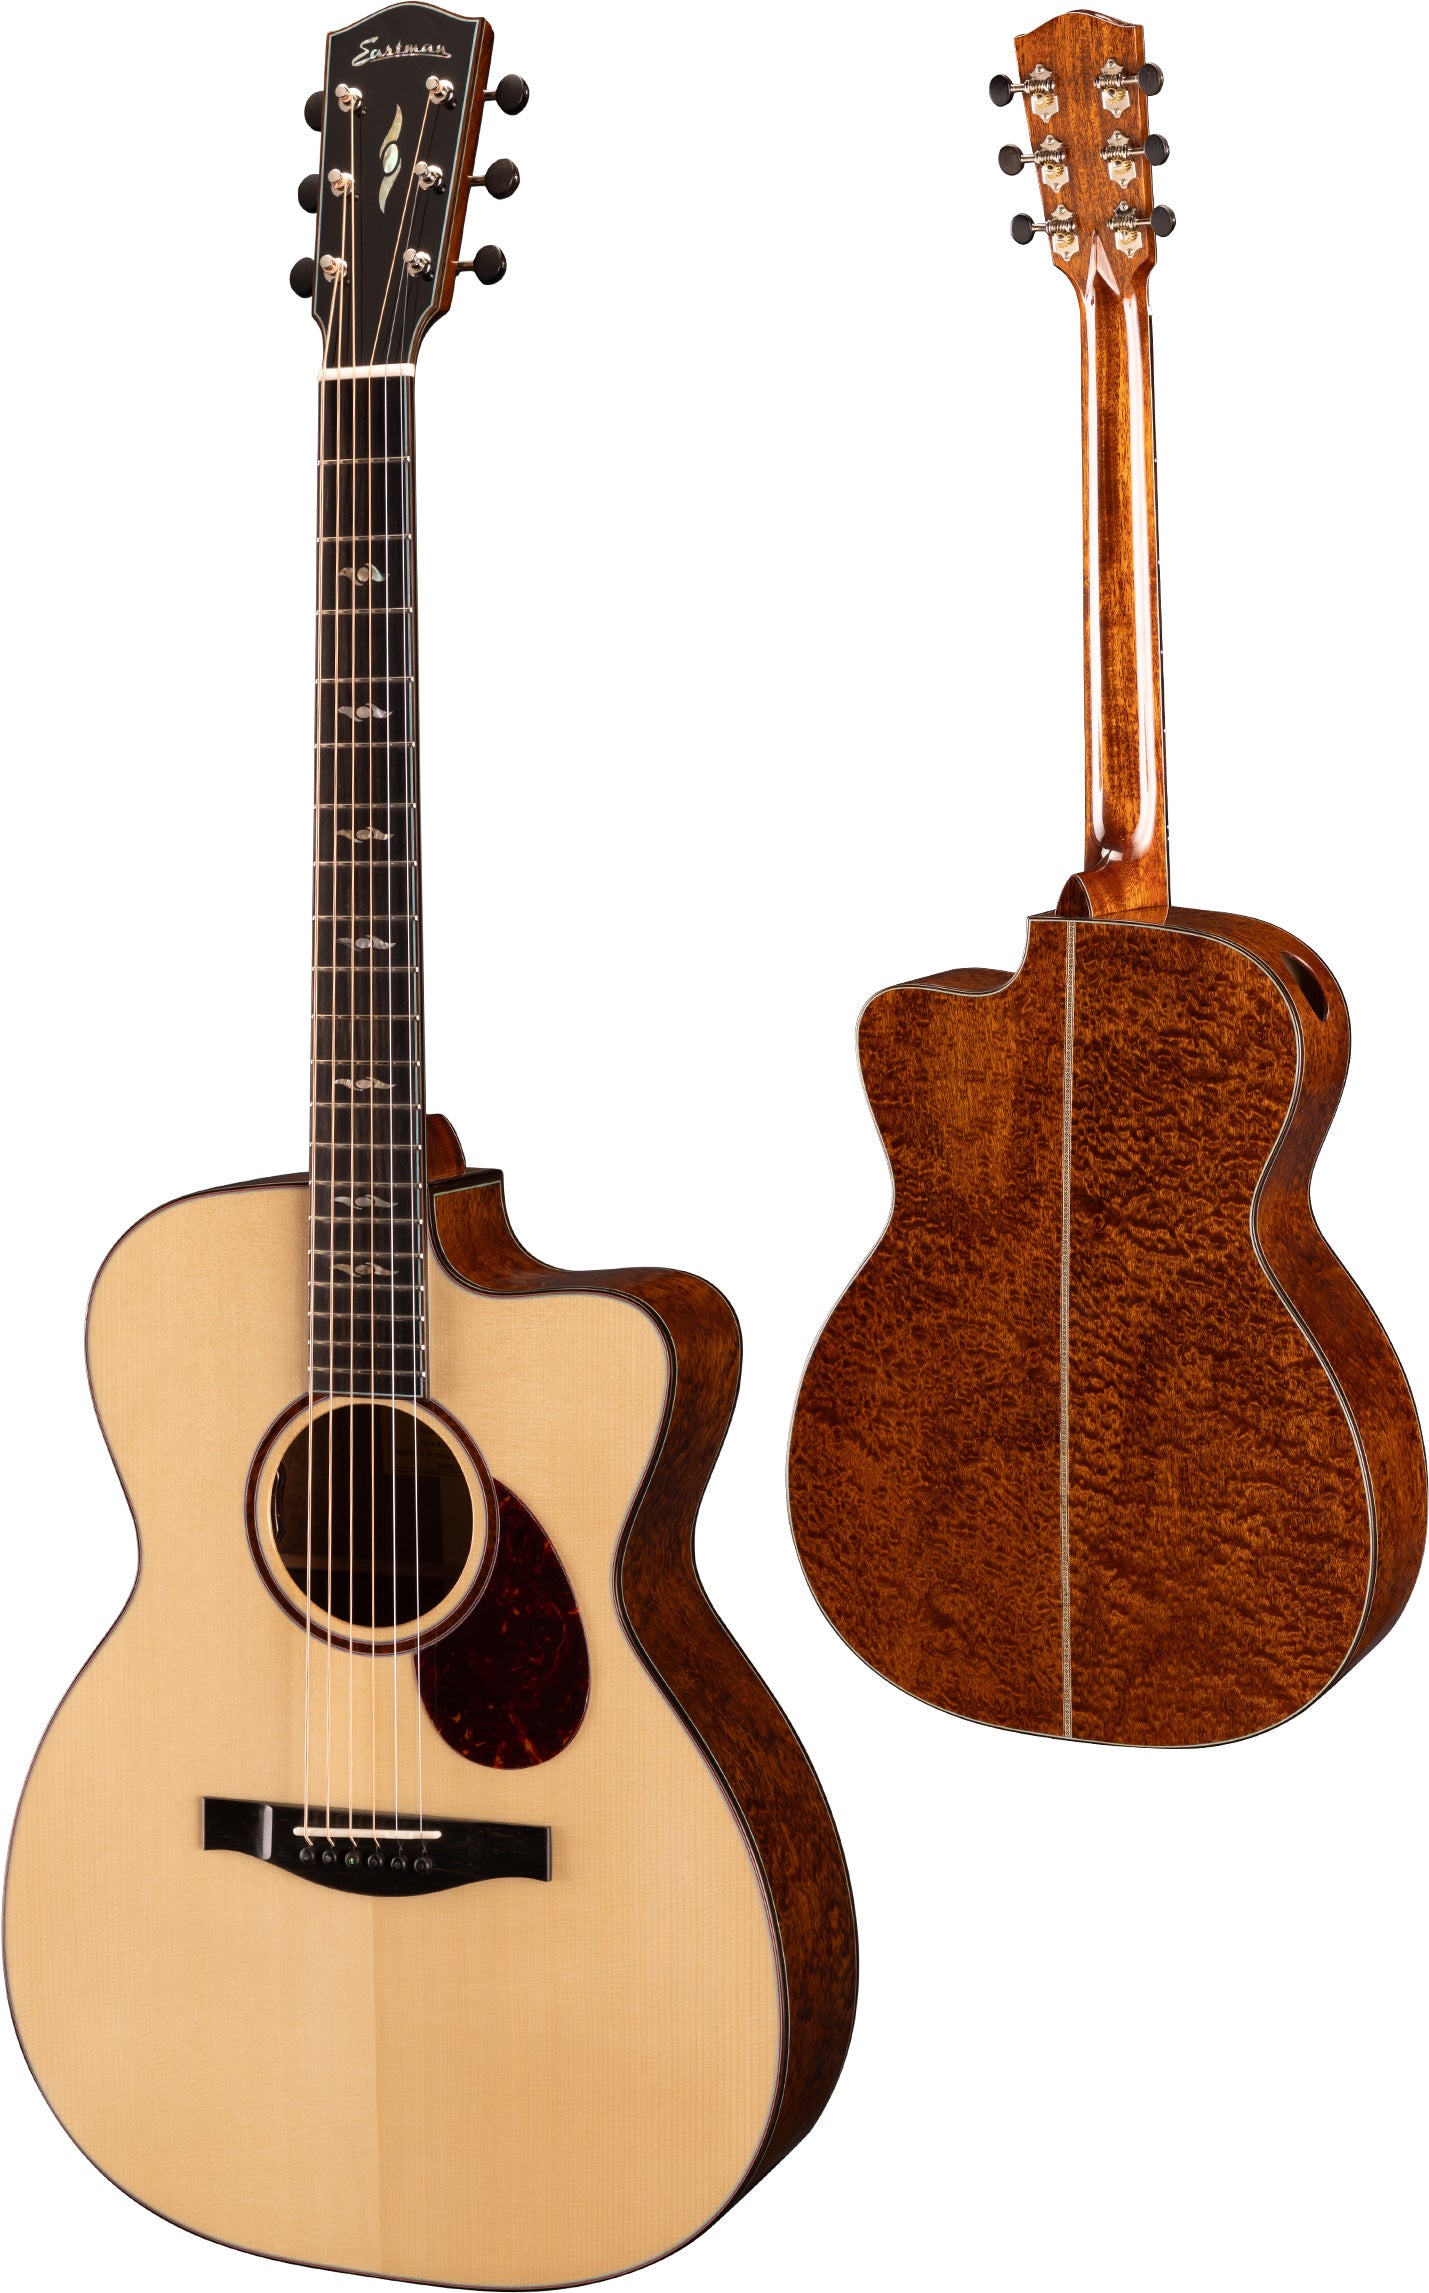 Eastman L-OMCE-QS, Electro Acoustic Guitar for sale at Richards Guitars.